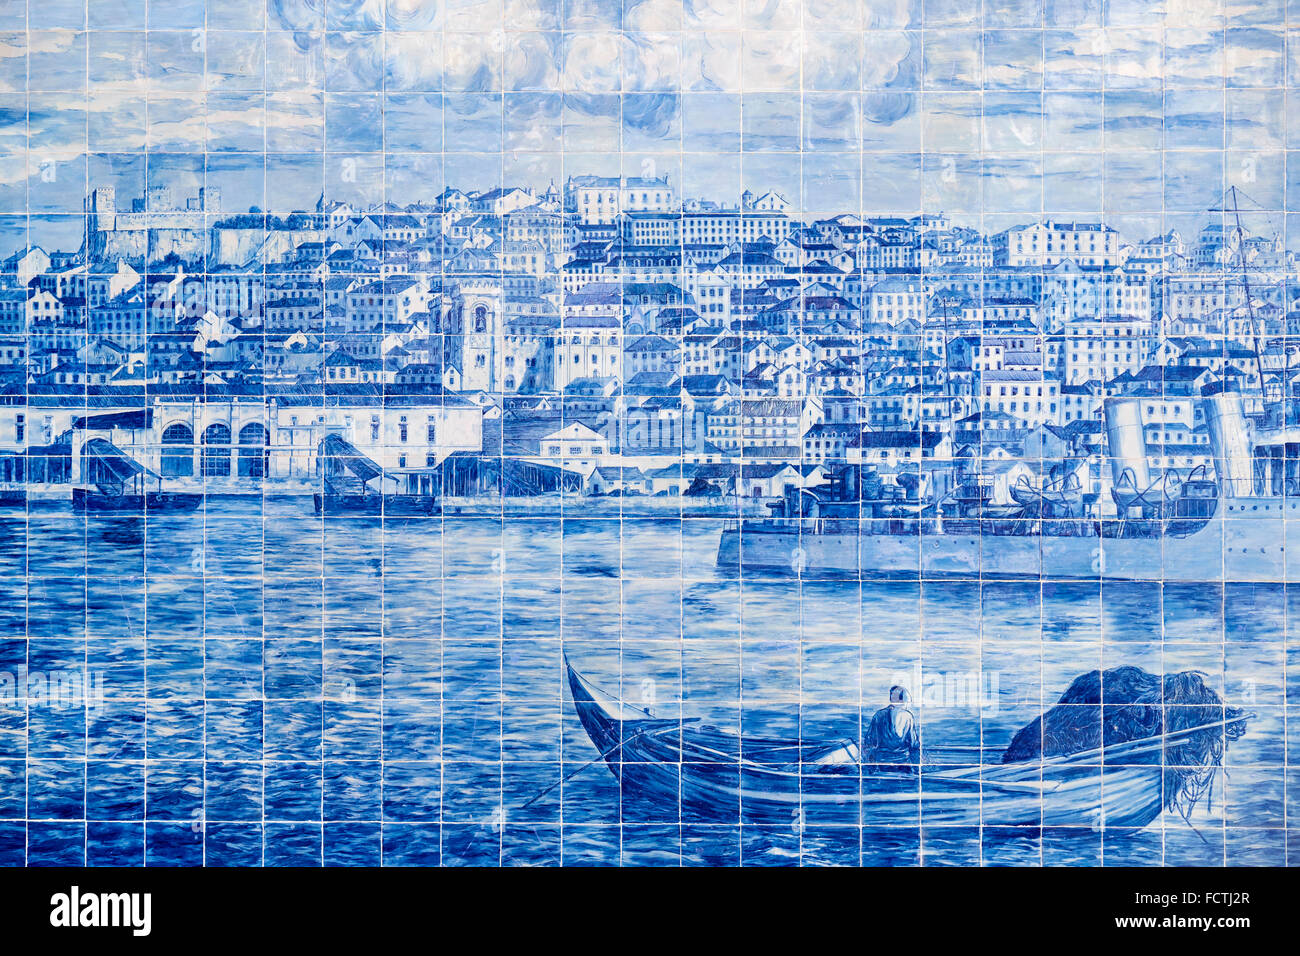 Portugal Lisbon Alfama azulejos depict Lisbon city Stock Photo